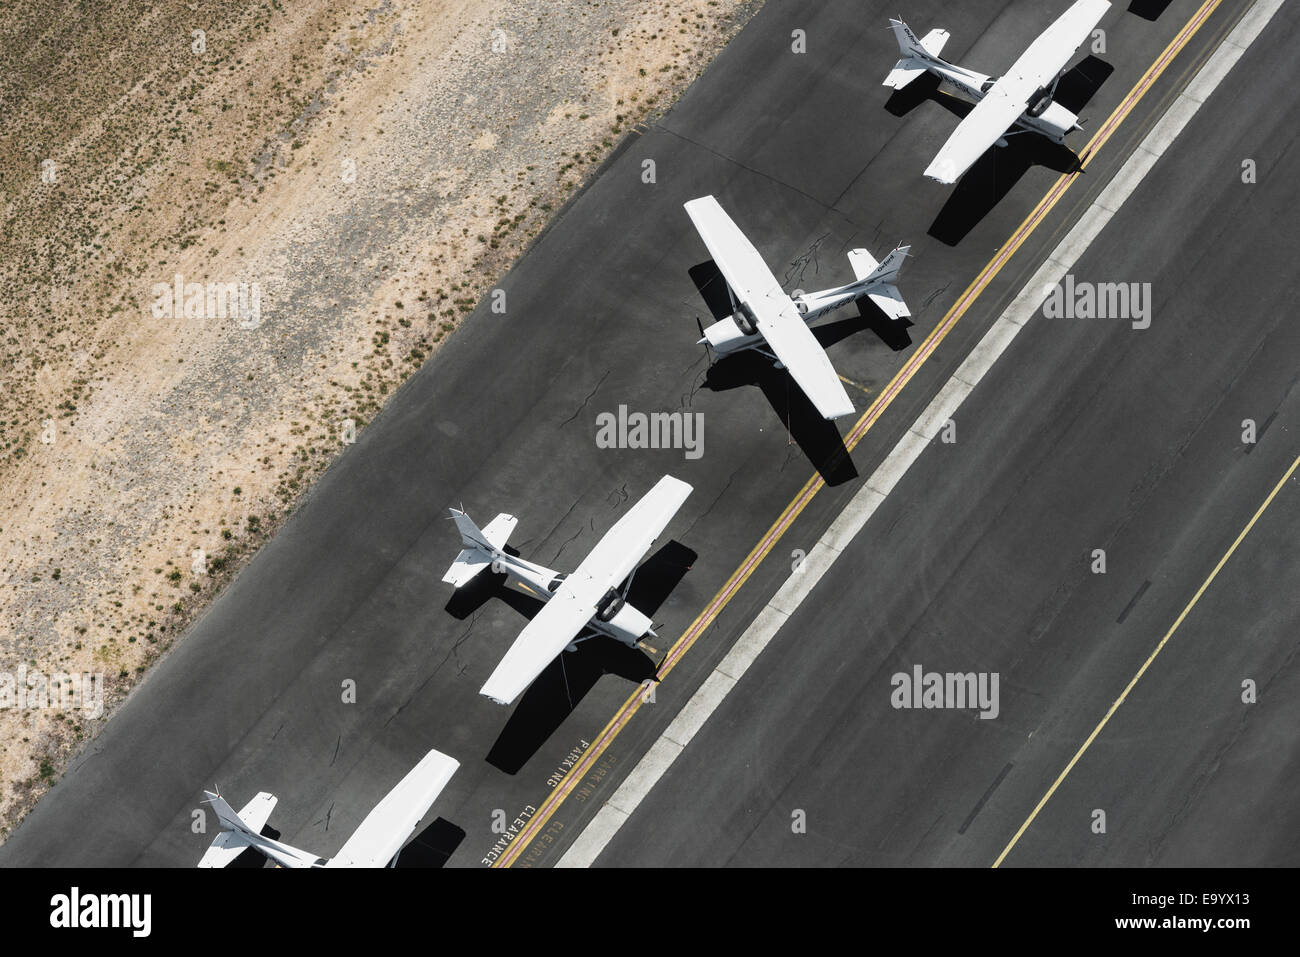 Aerial view of four airplanes on runway, St Kilda, Melbourne, Victoria, Australia Stock Photo